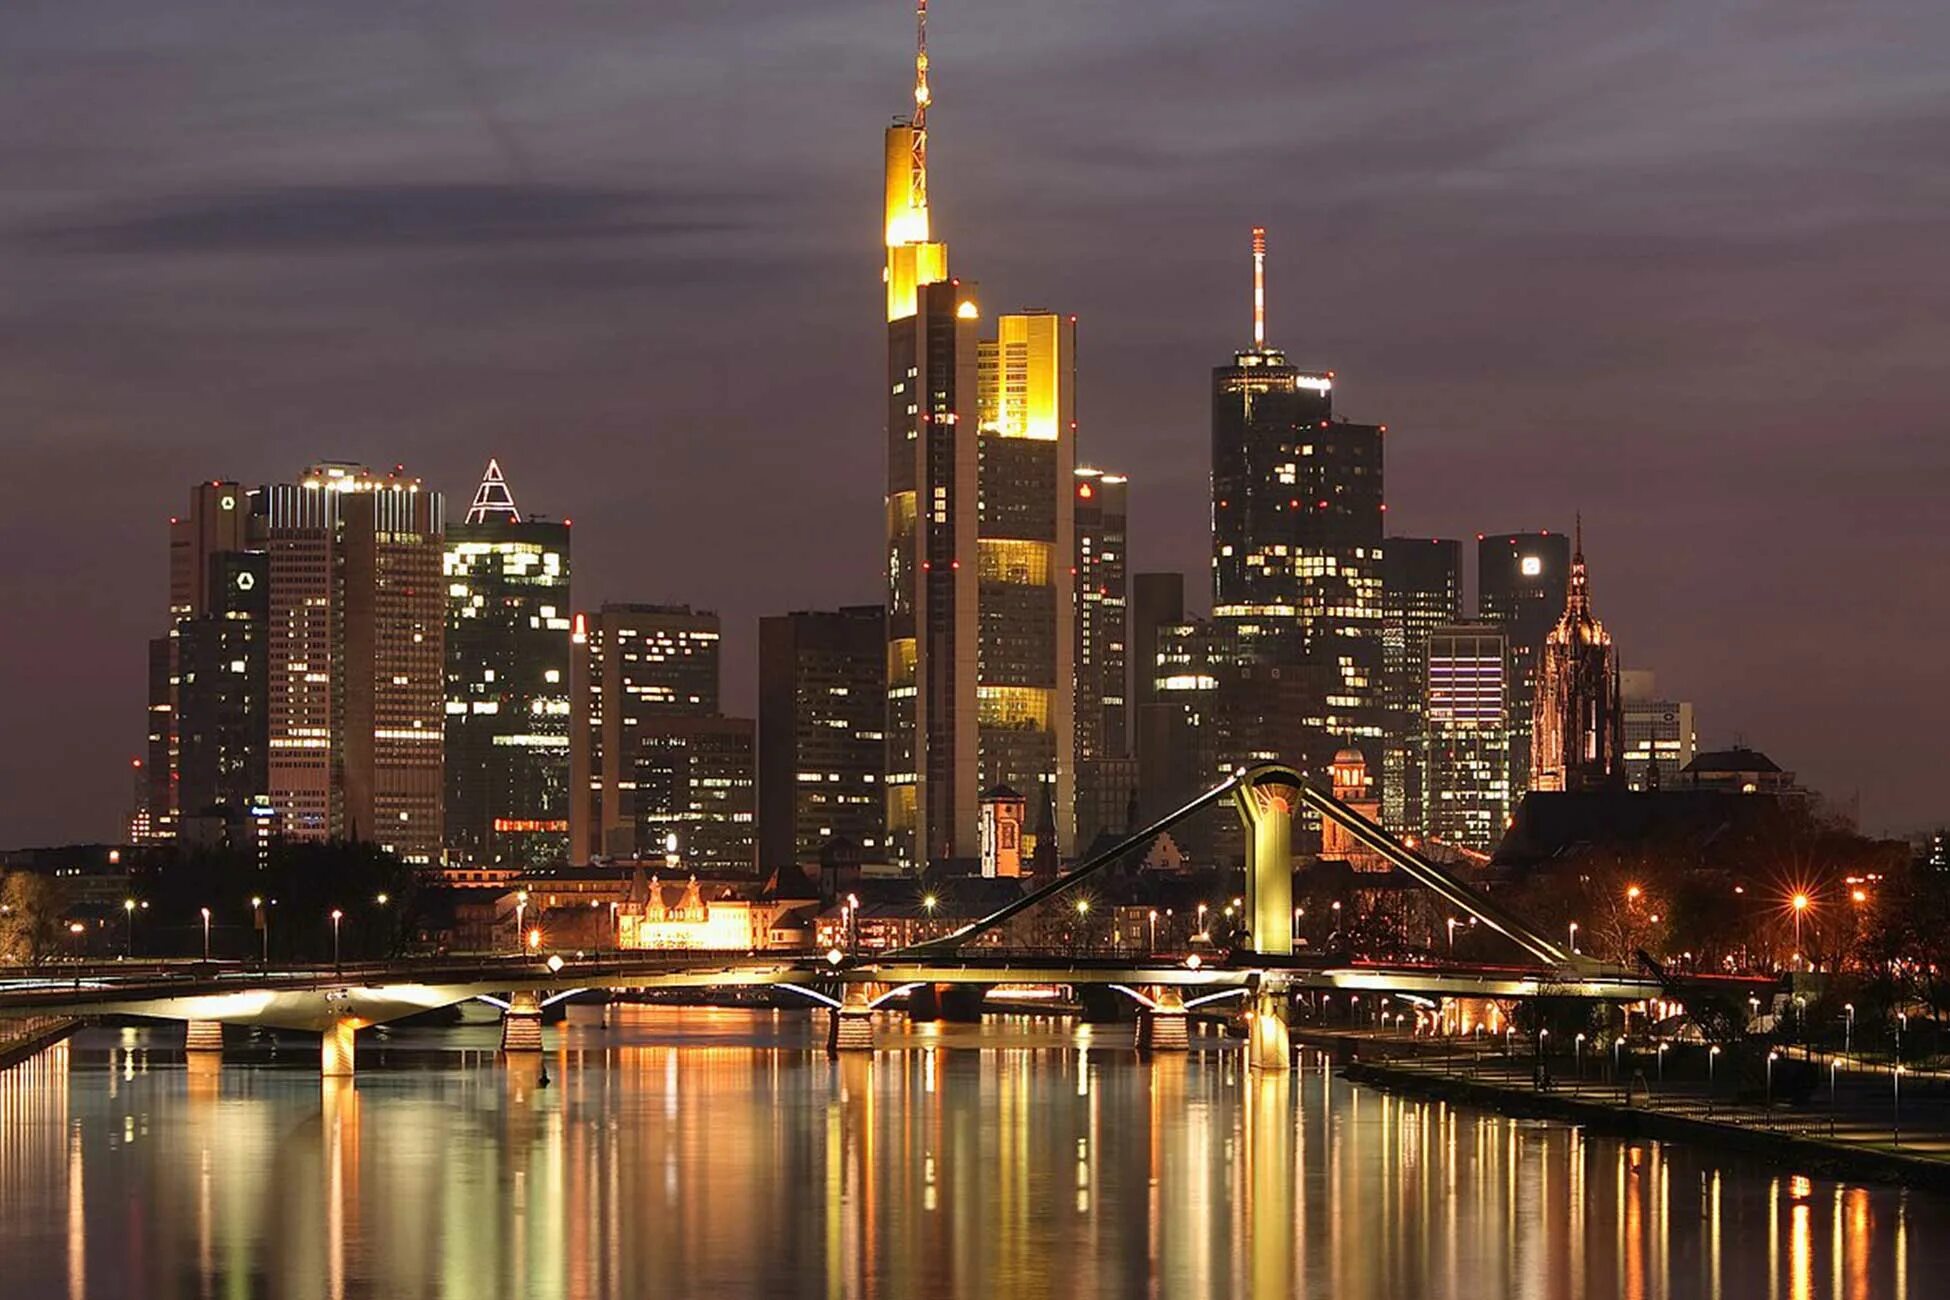 Main town. Германия Франкфурт на Майне. Skyline Frankfurt am main. Франкфурт Скайлайн. City Франкфурт.